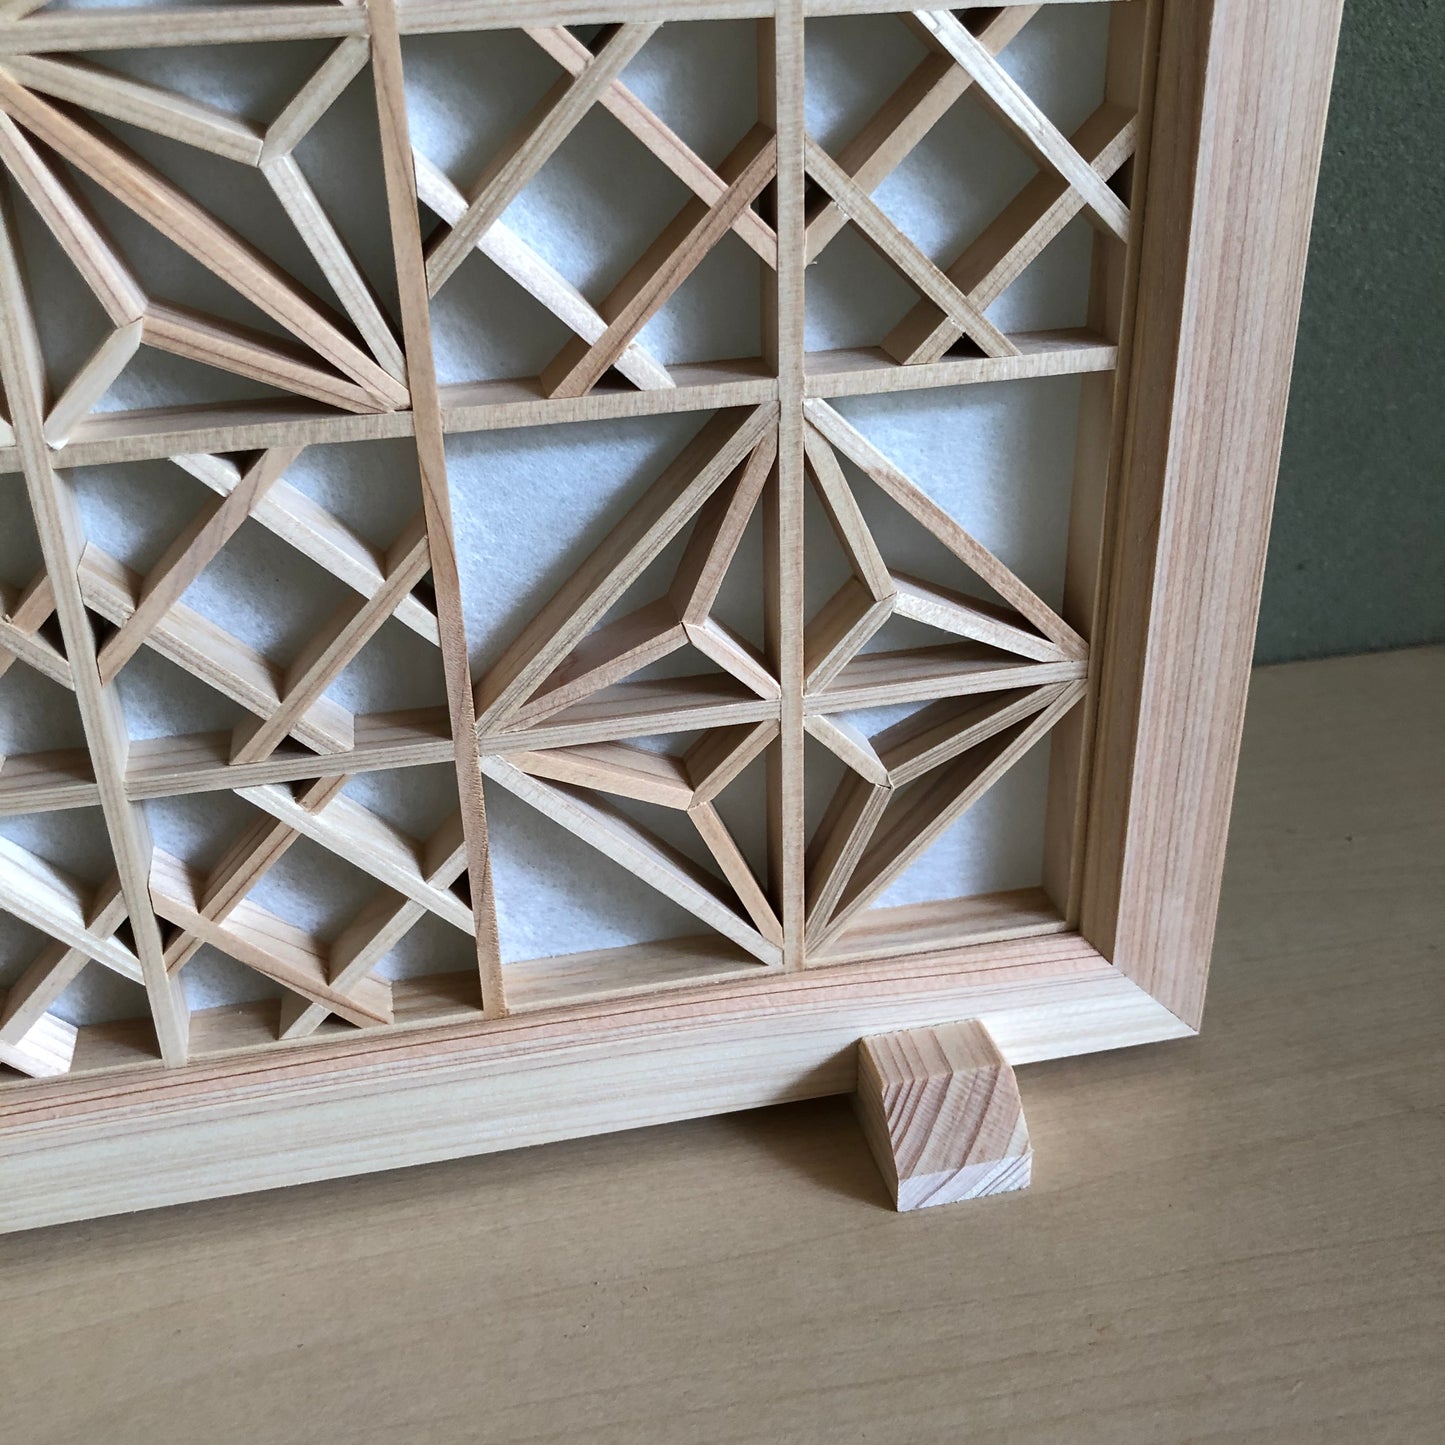 Kumiko work art panel M pattern 4 domestic cypress copy with dedicated stand